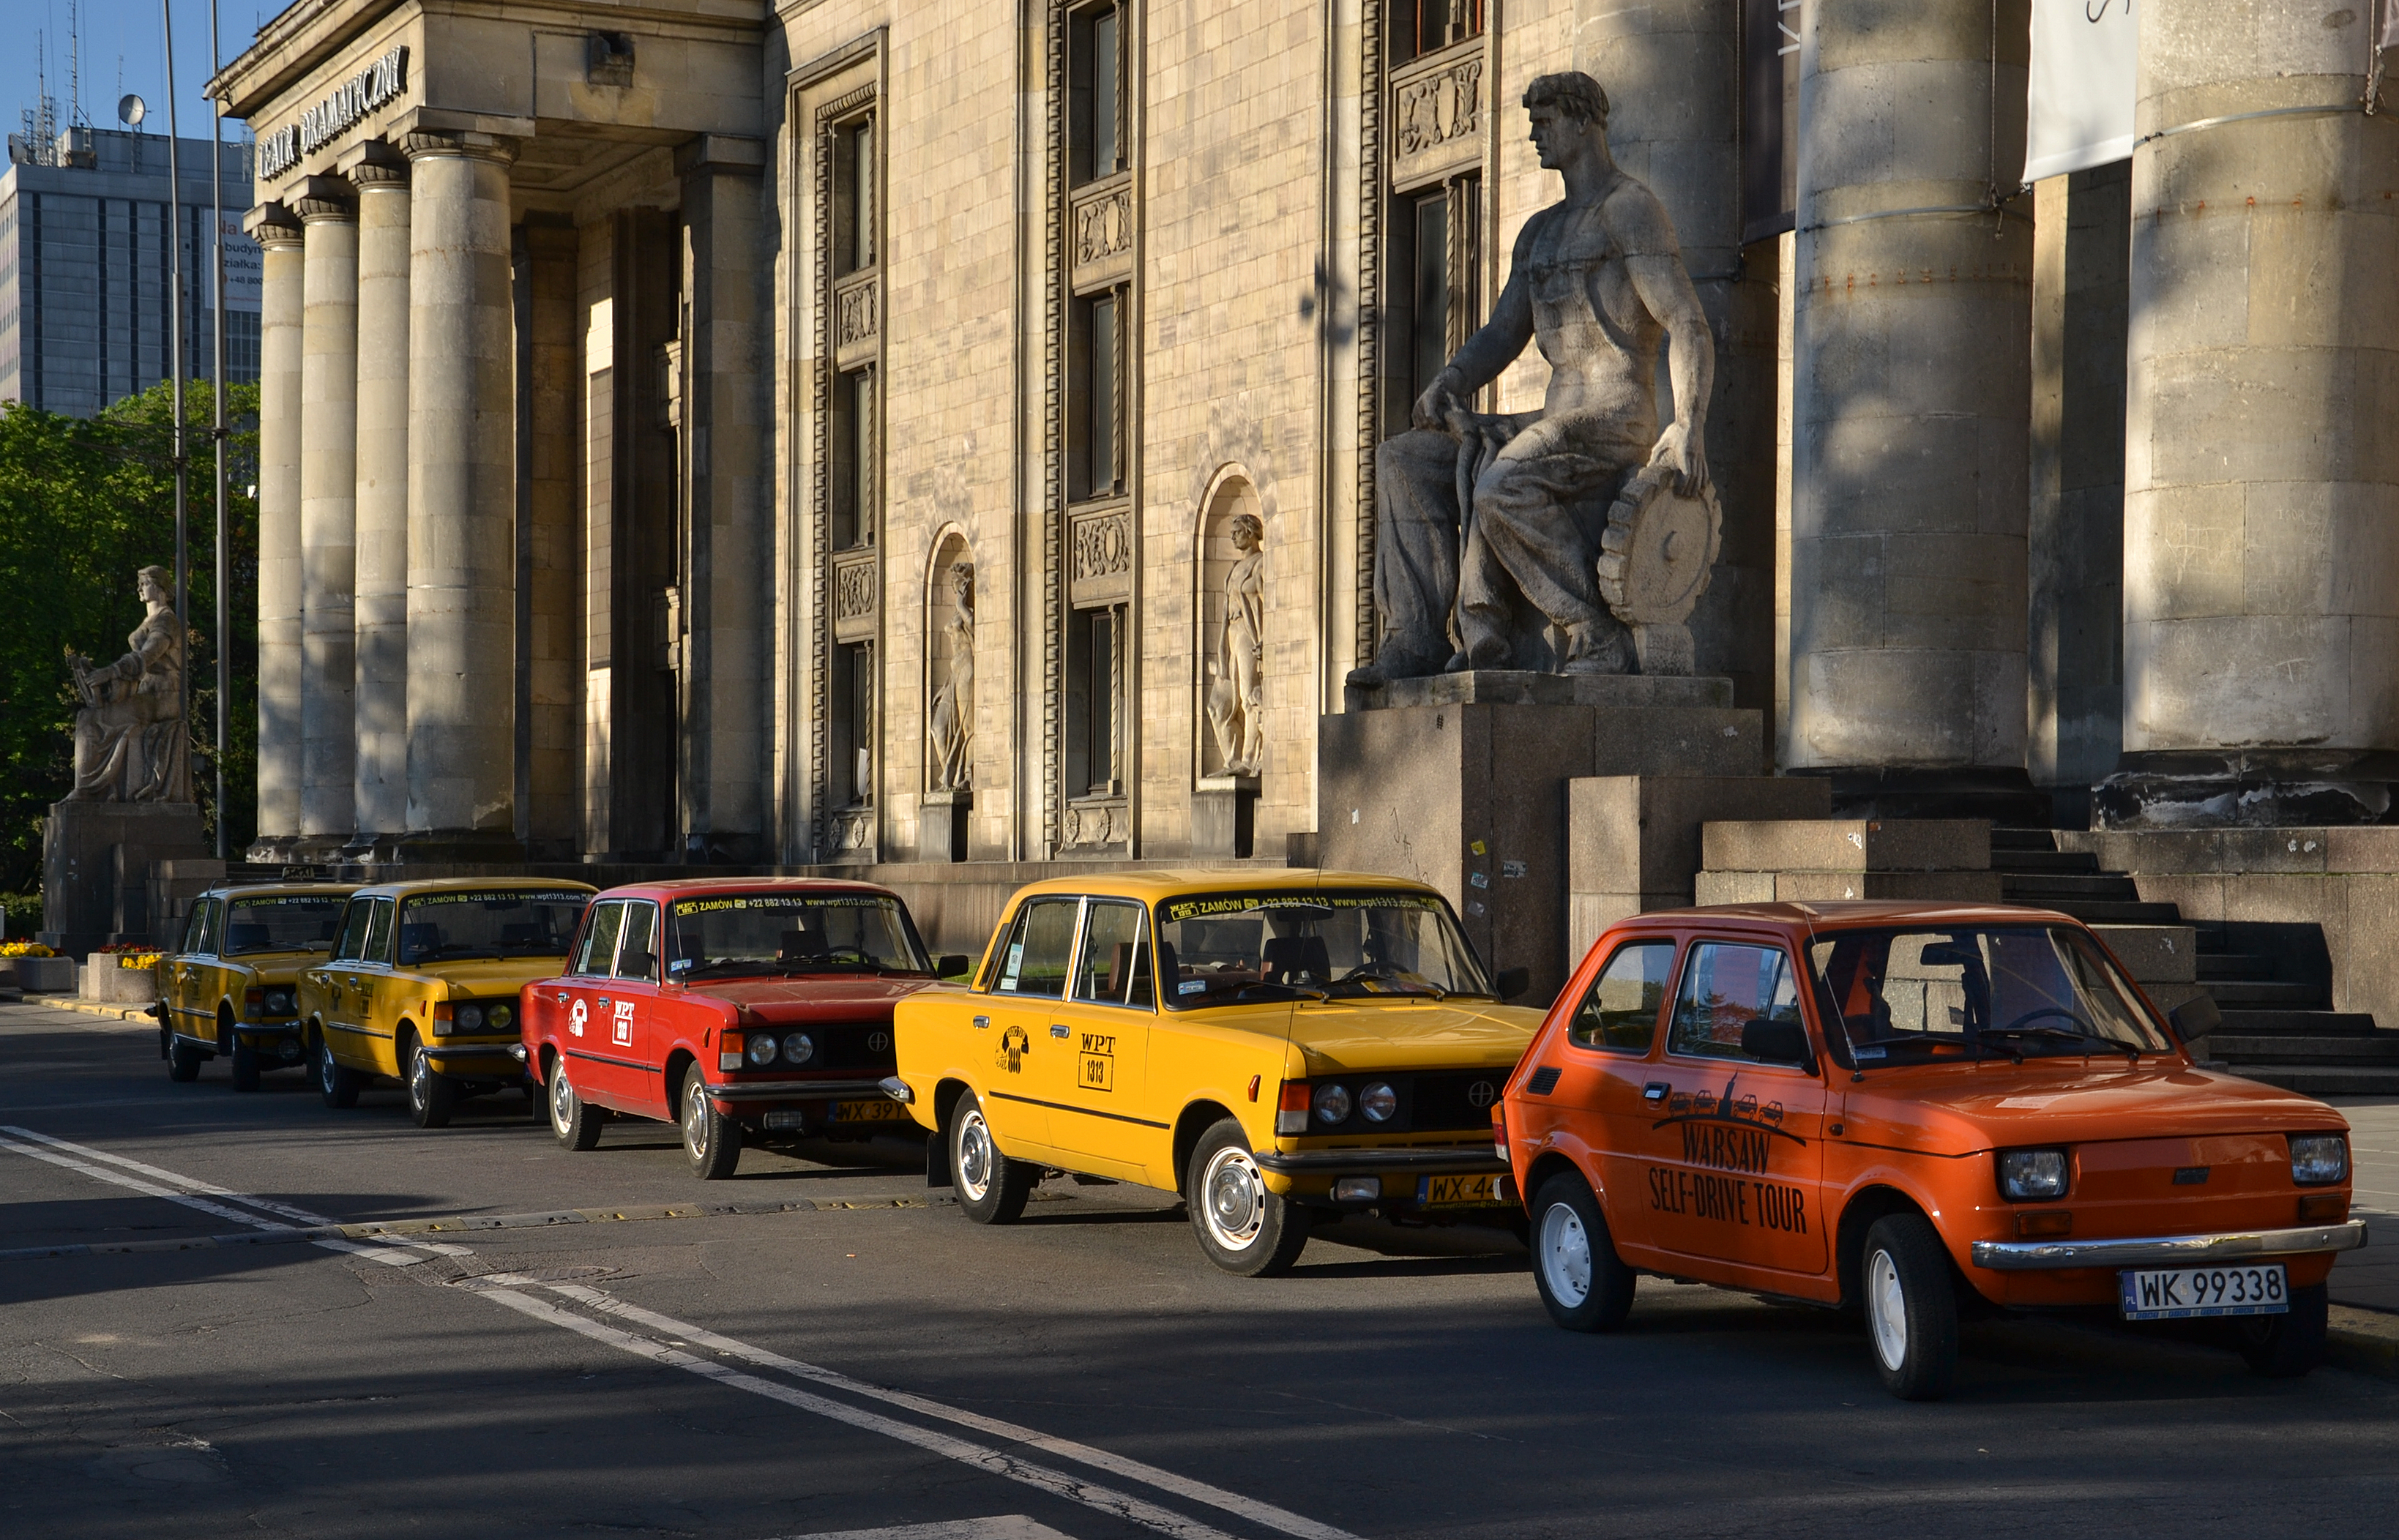 Warszawa (Warsaw) - old polish cars (Fiat126p and Fiat125p)